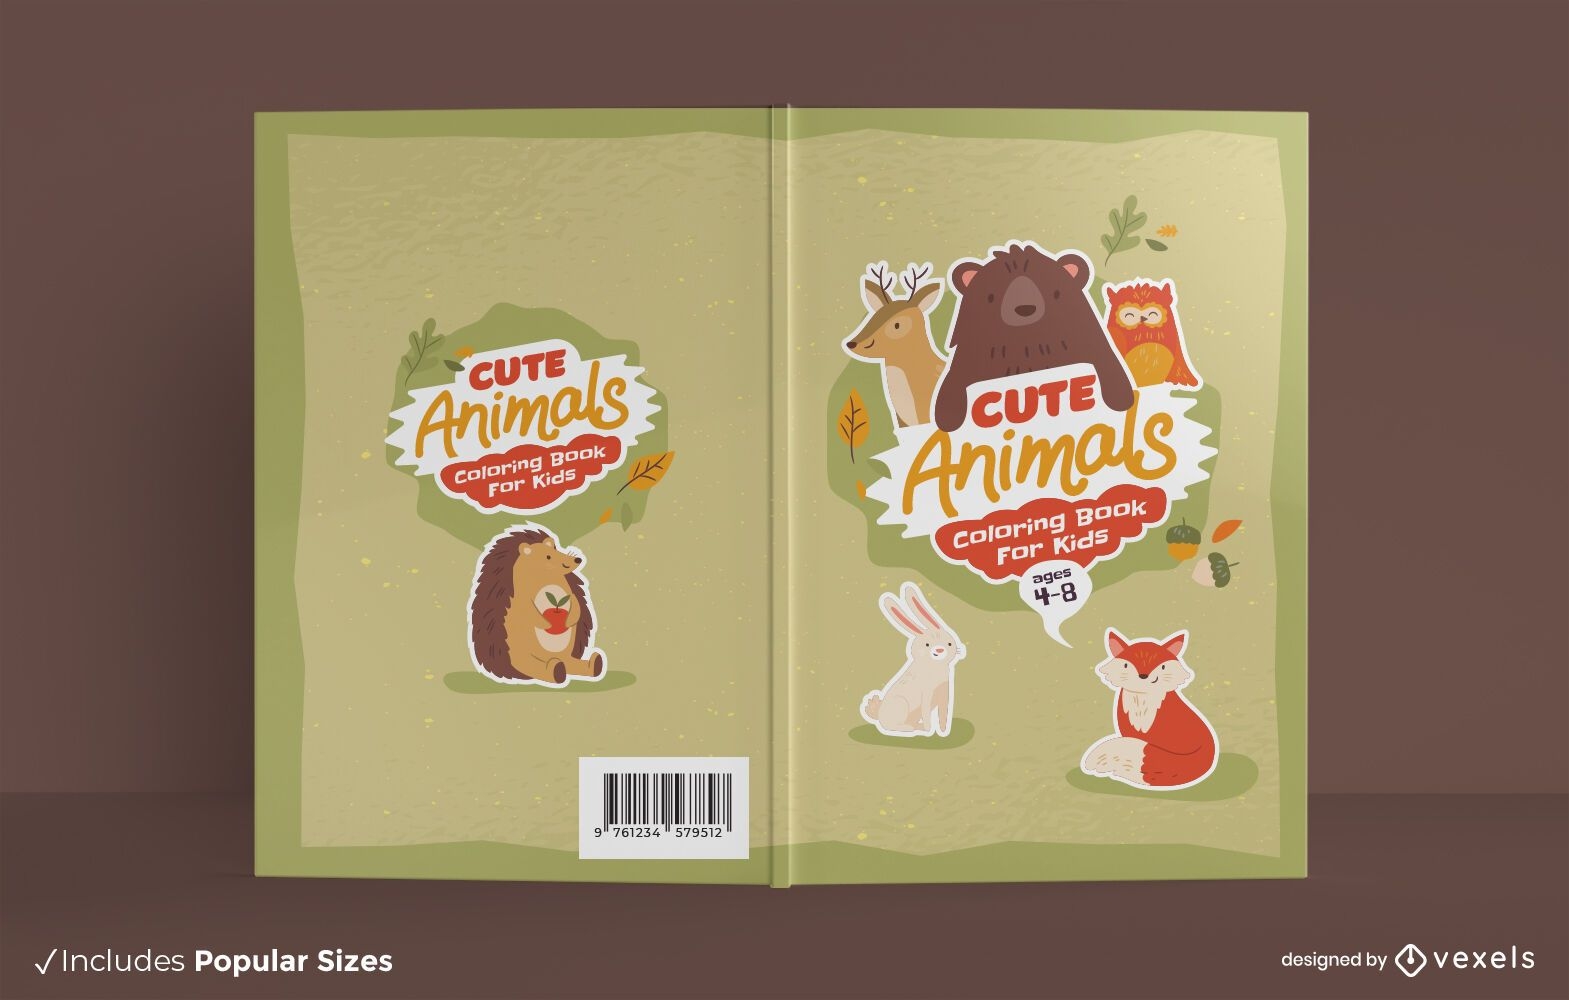 Cute animals coloring book cover design